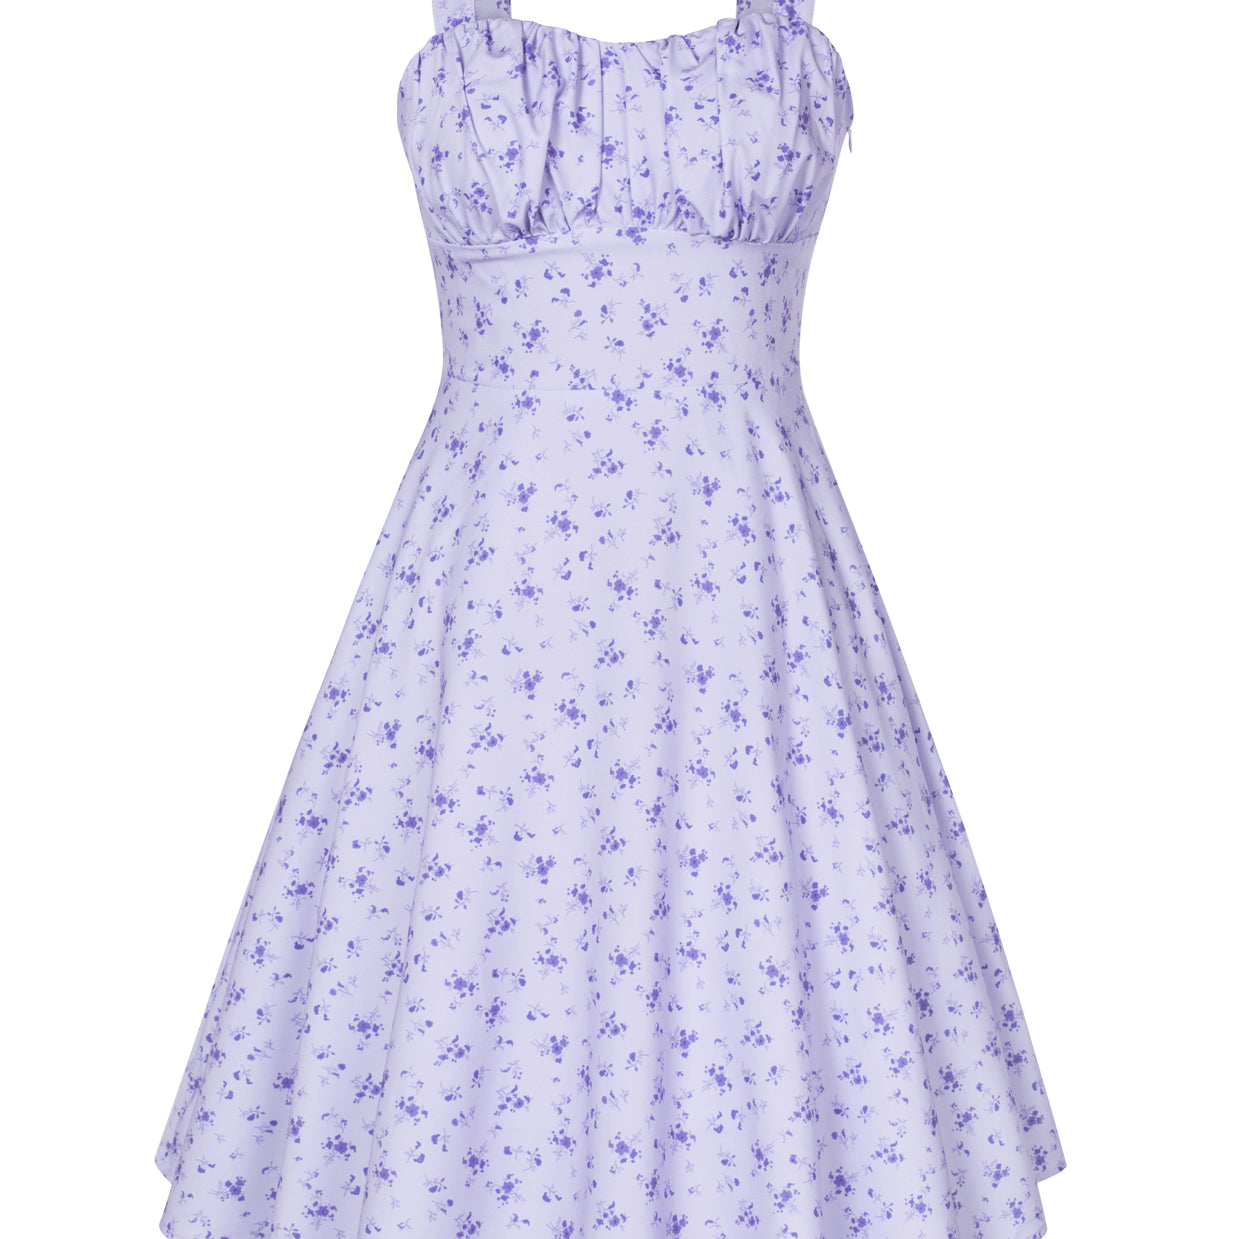 Vintage Floral Printed Defined Waist Dress Ruched Bodice Flared A-Line Dress